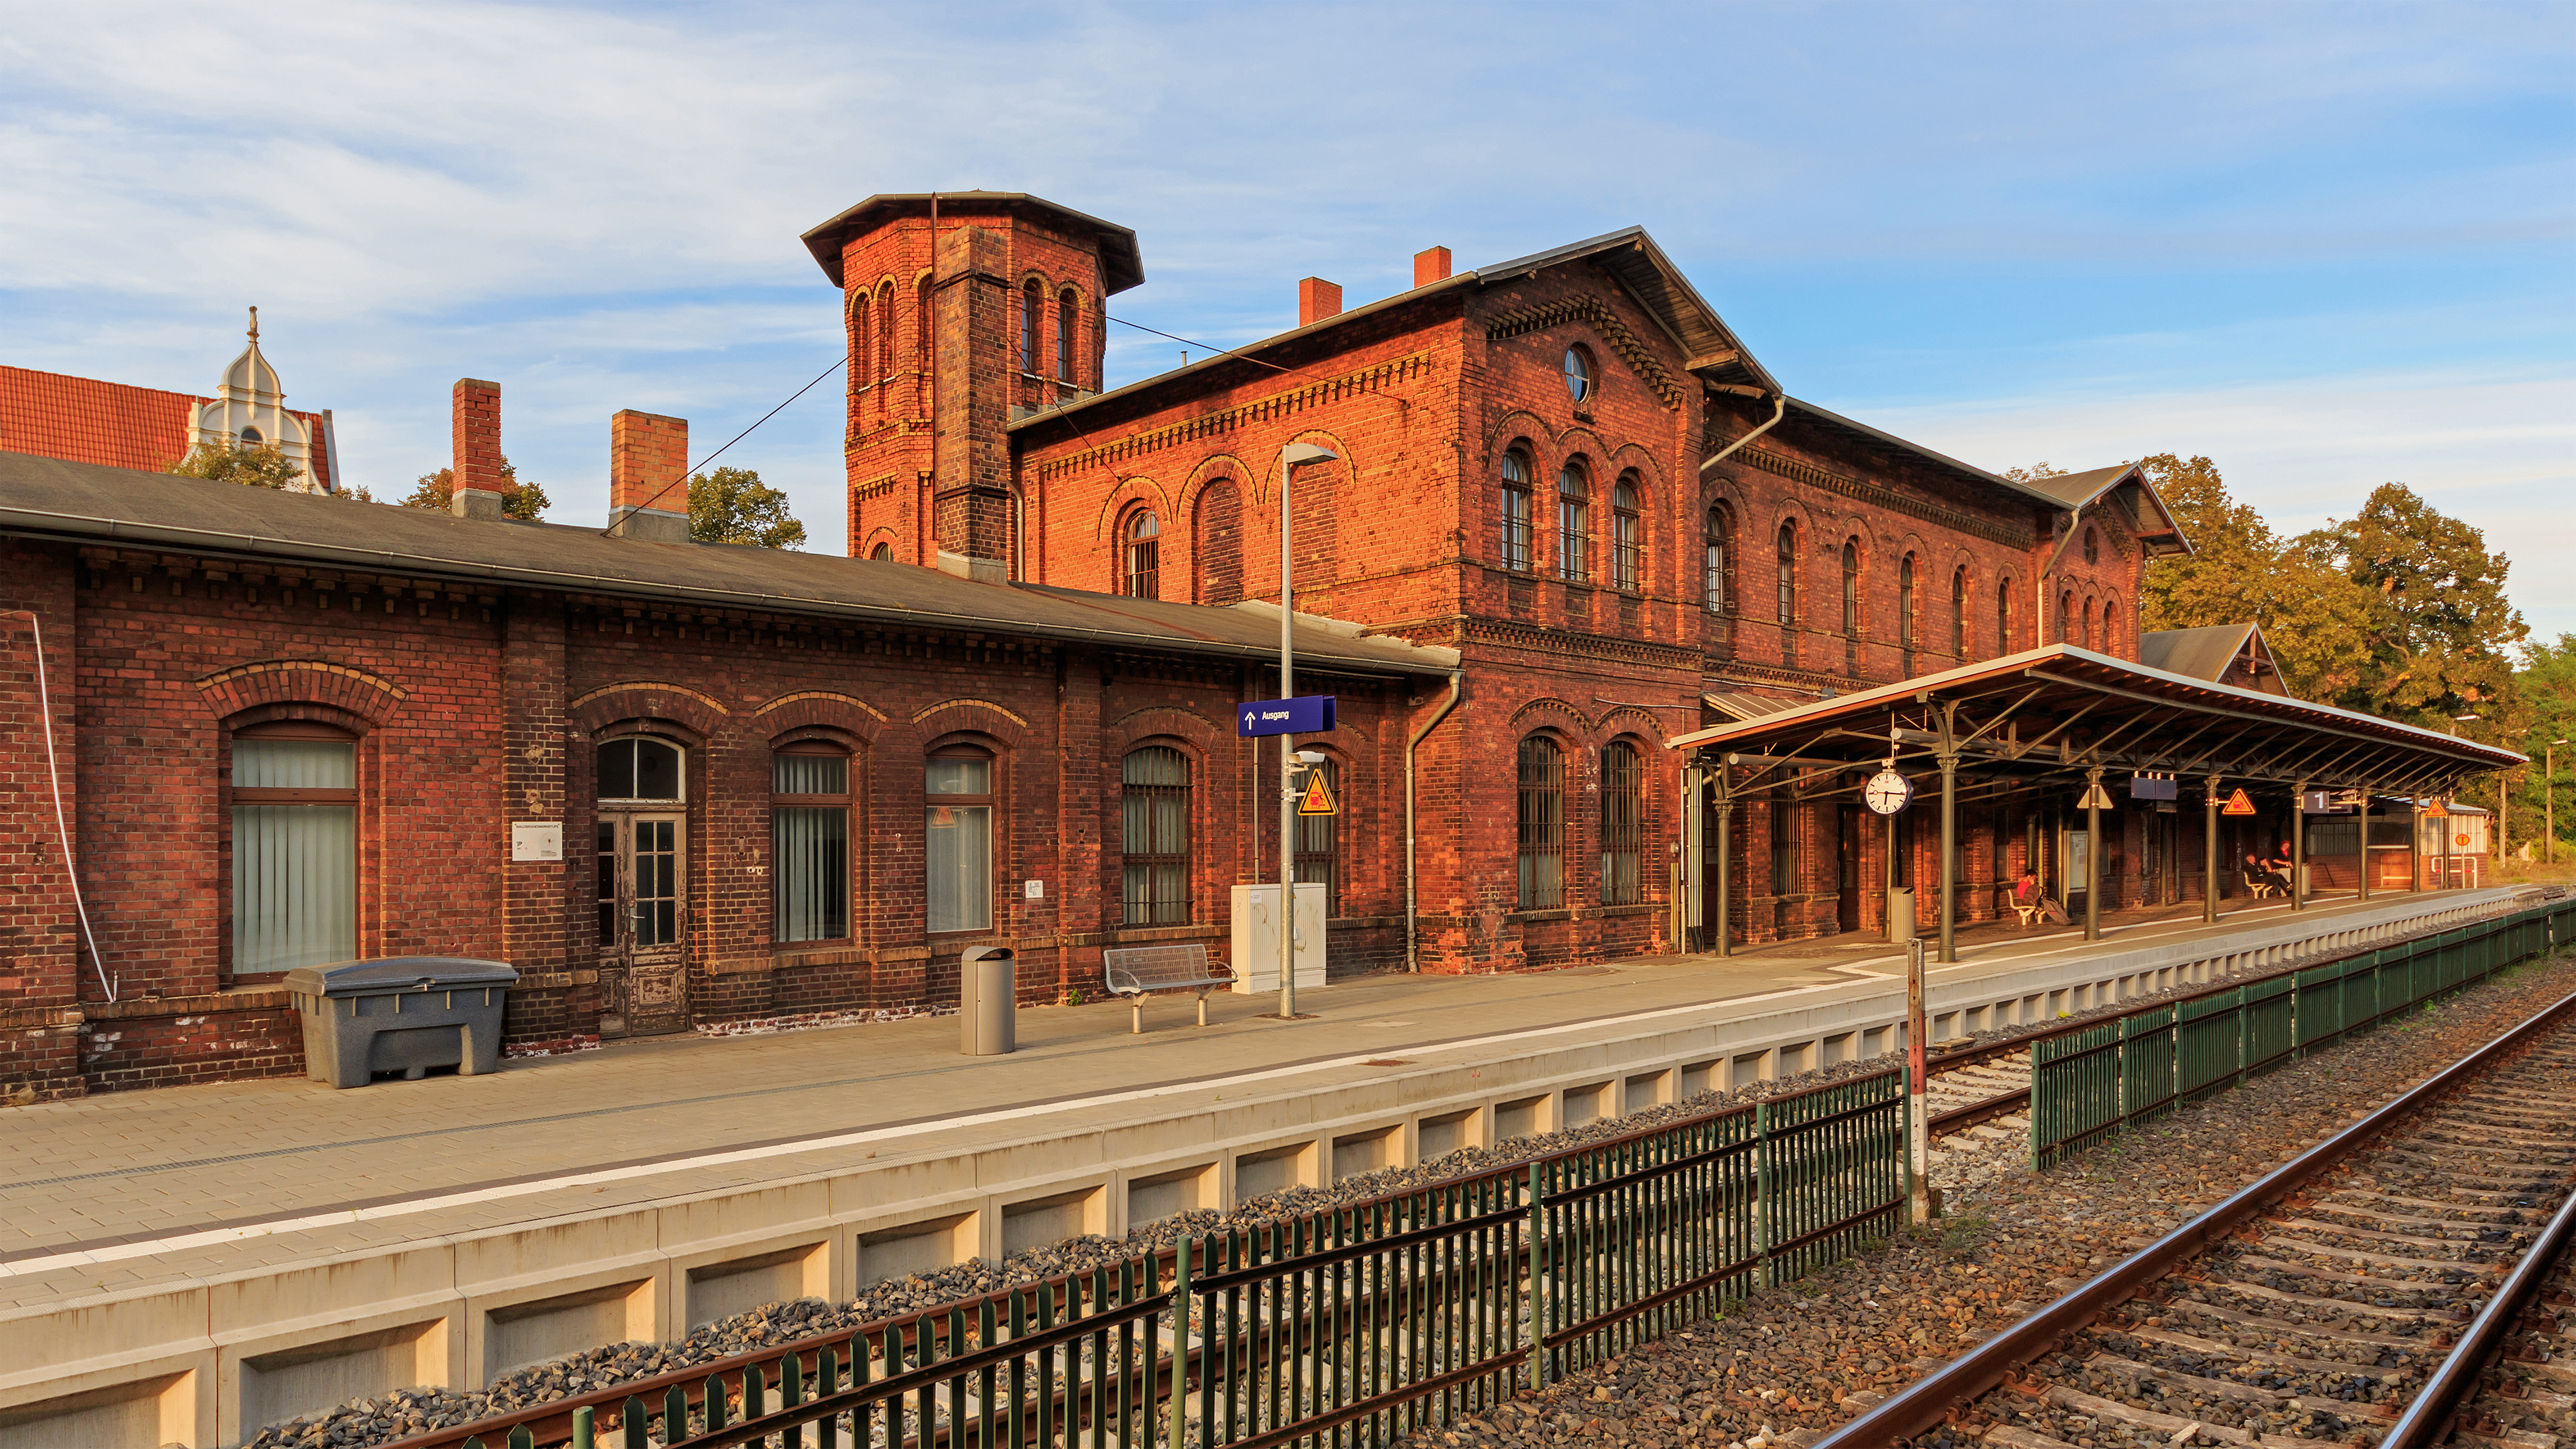 Forst (Lausitz) station - Wikipedia